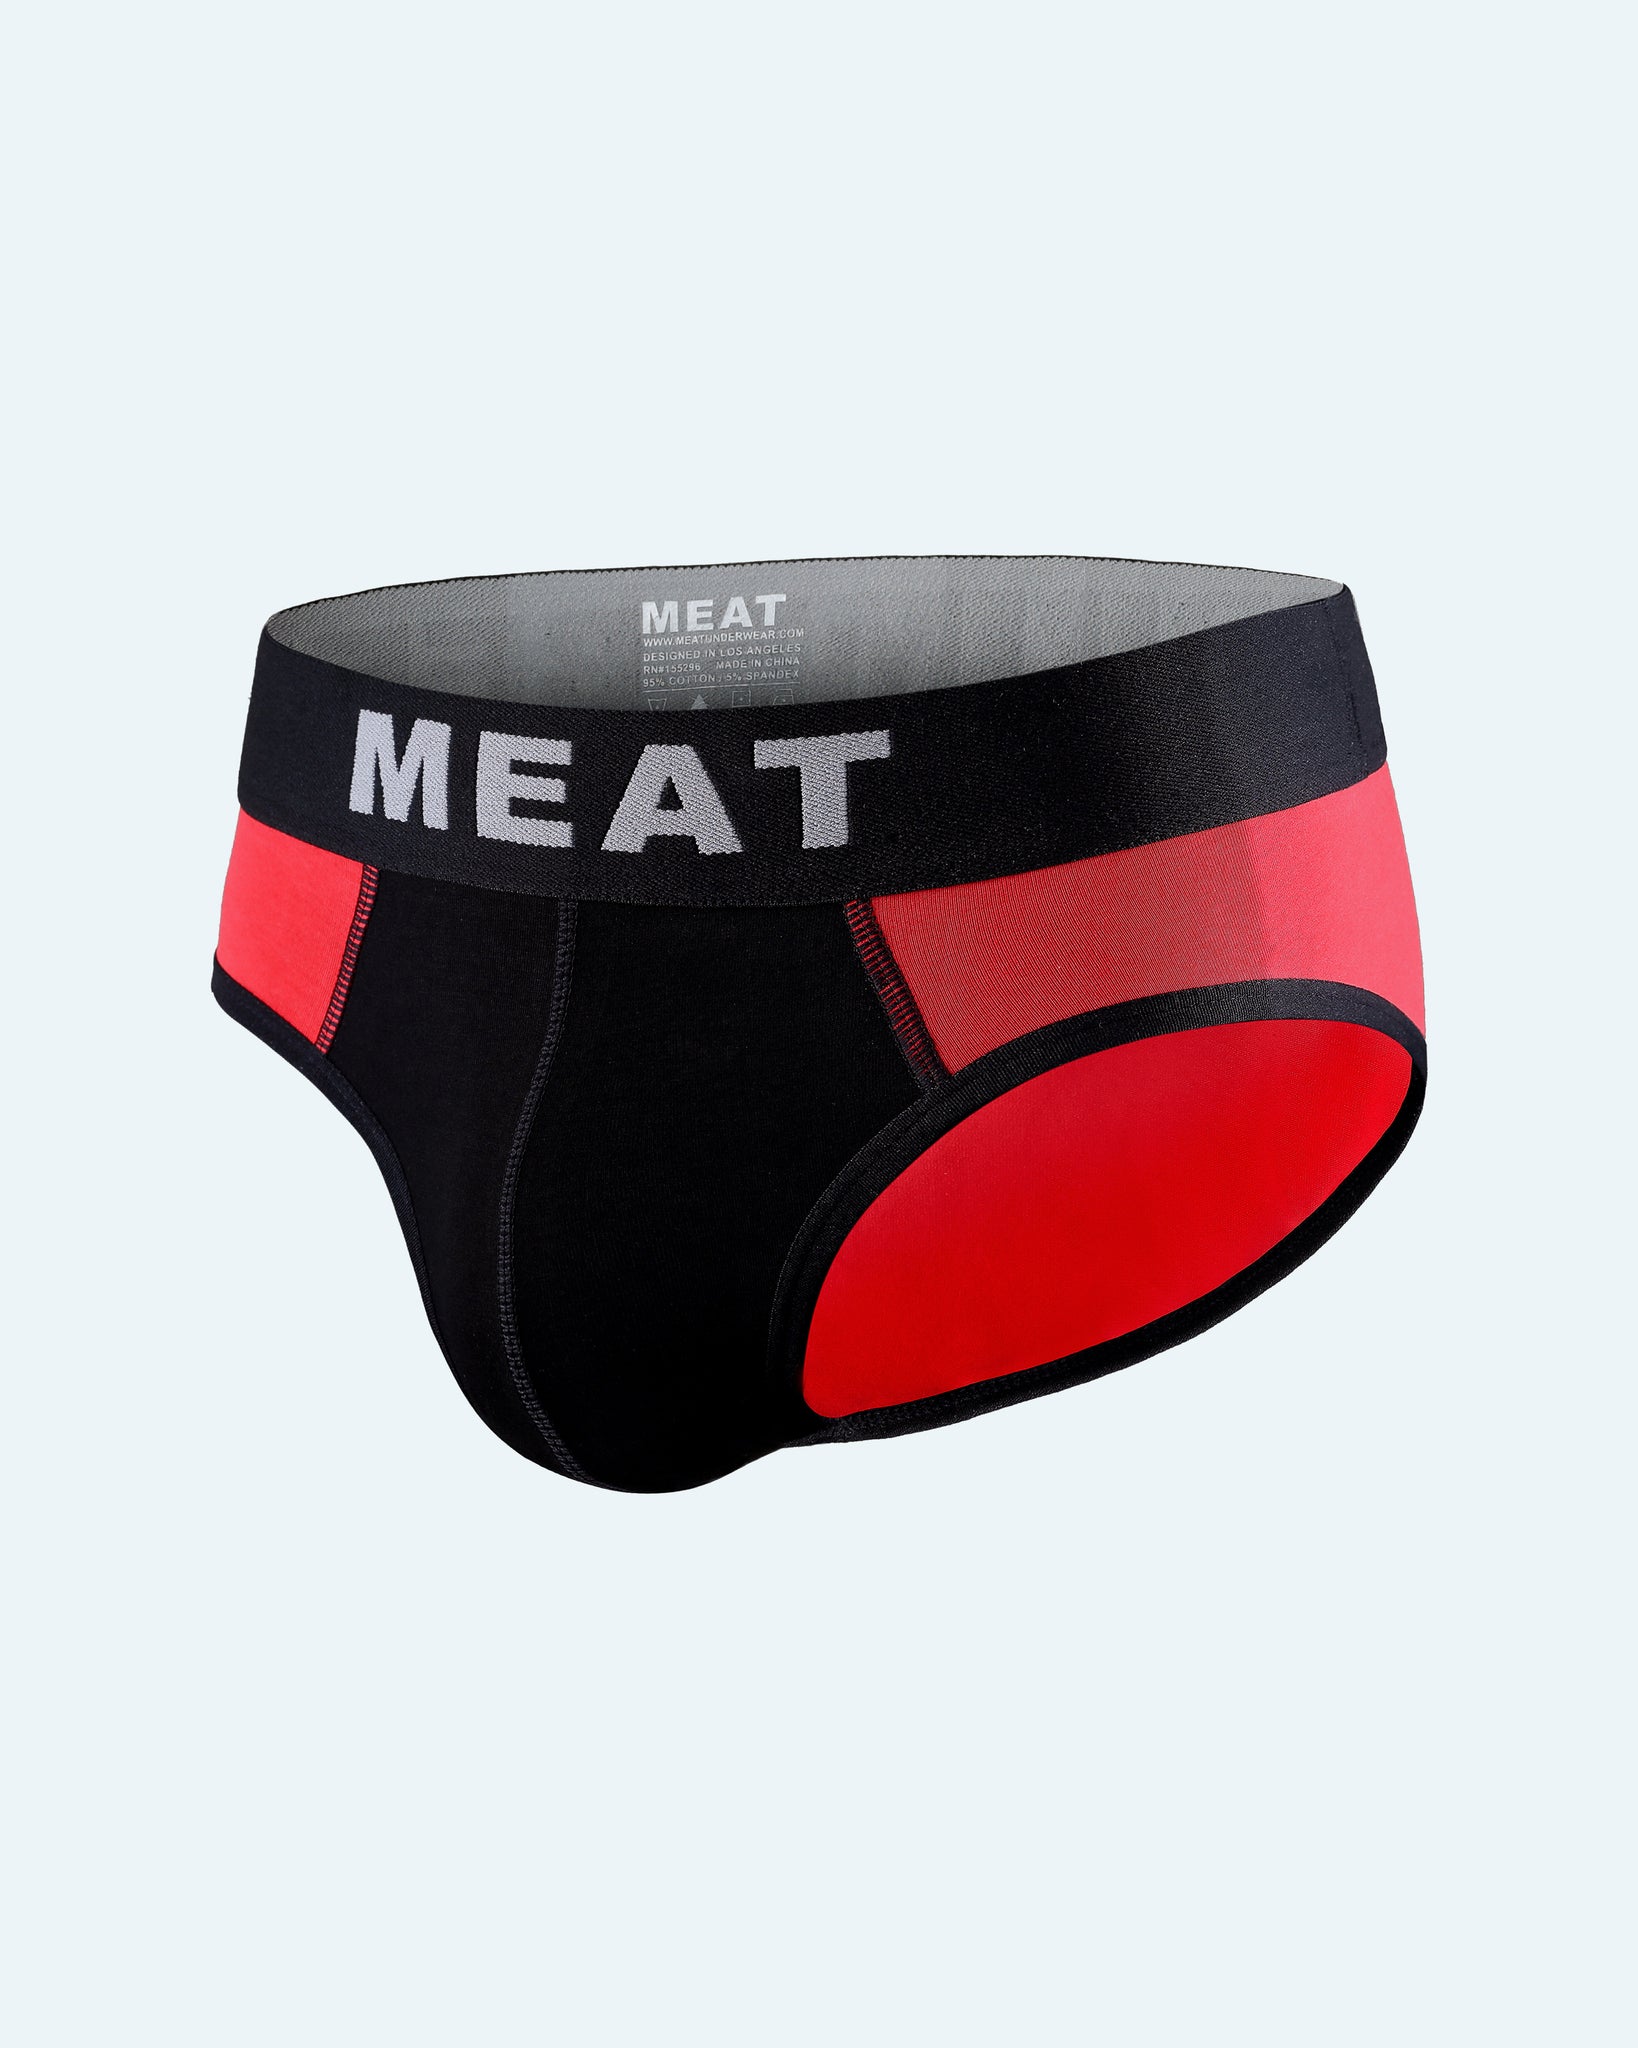 Meat underwear review. Jockstraps, Boxer Brief, and Briefs. (Mens Underwear  Review) 